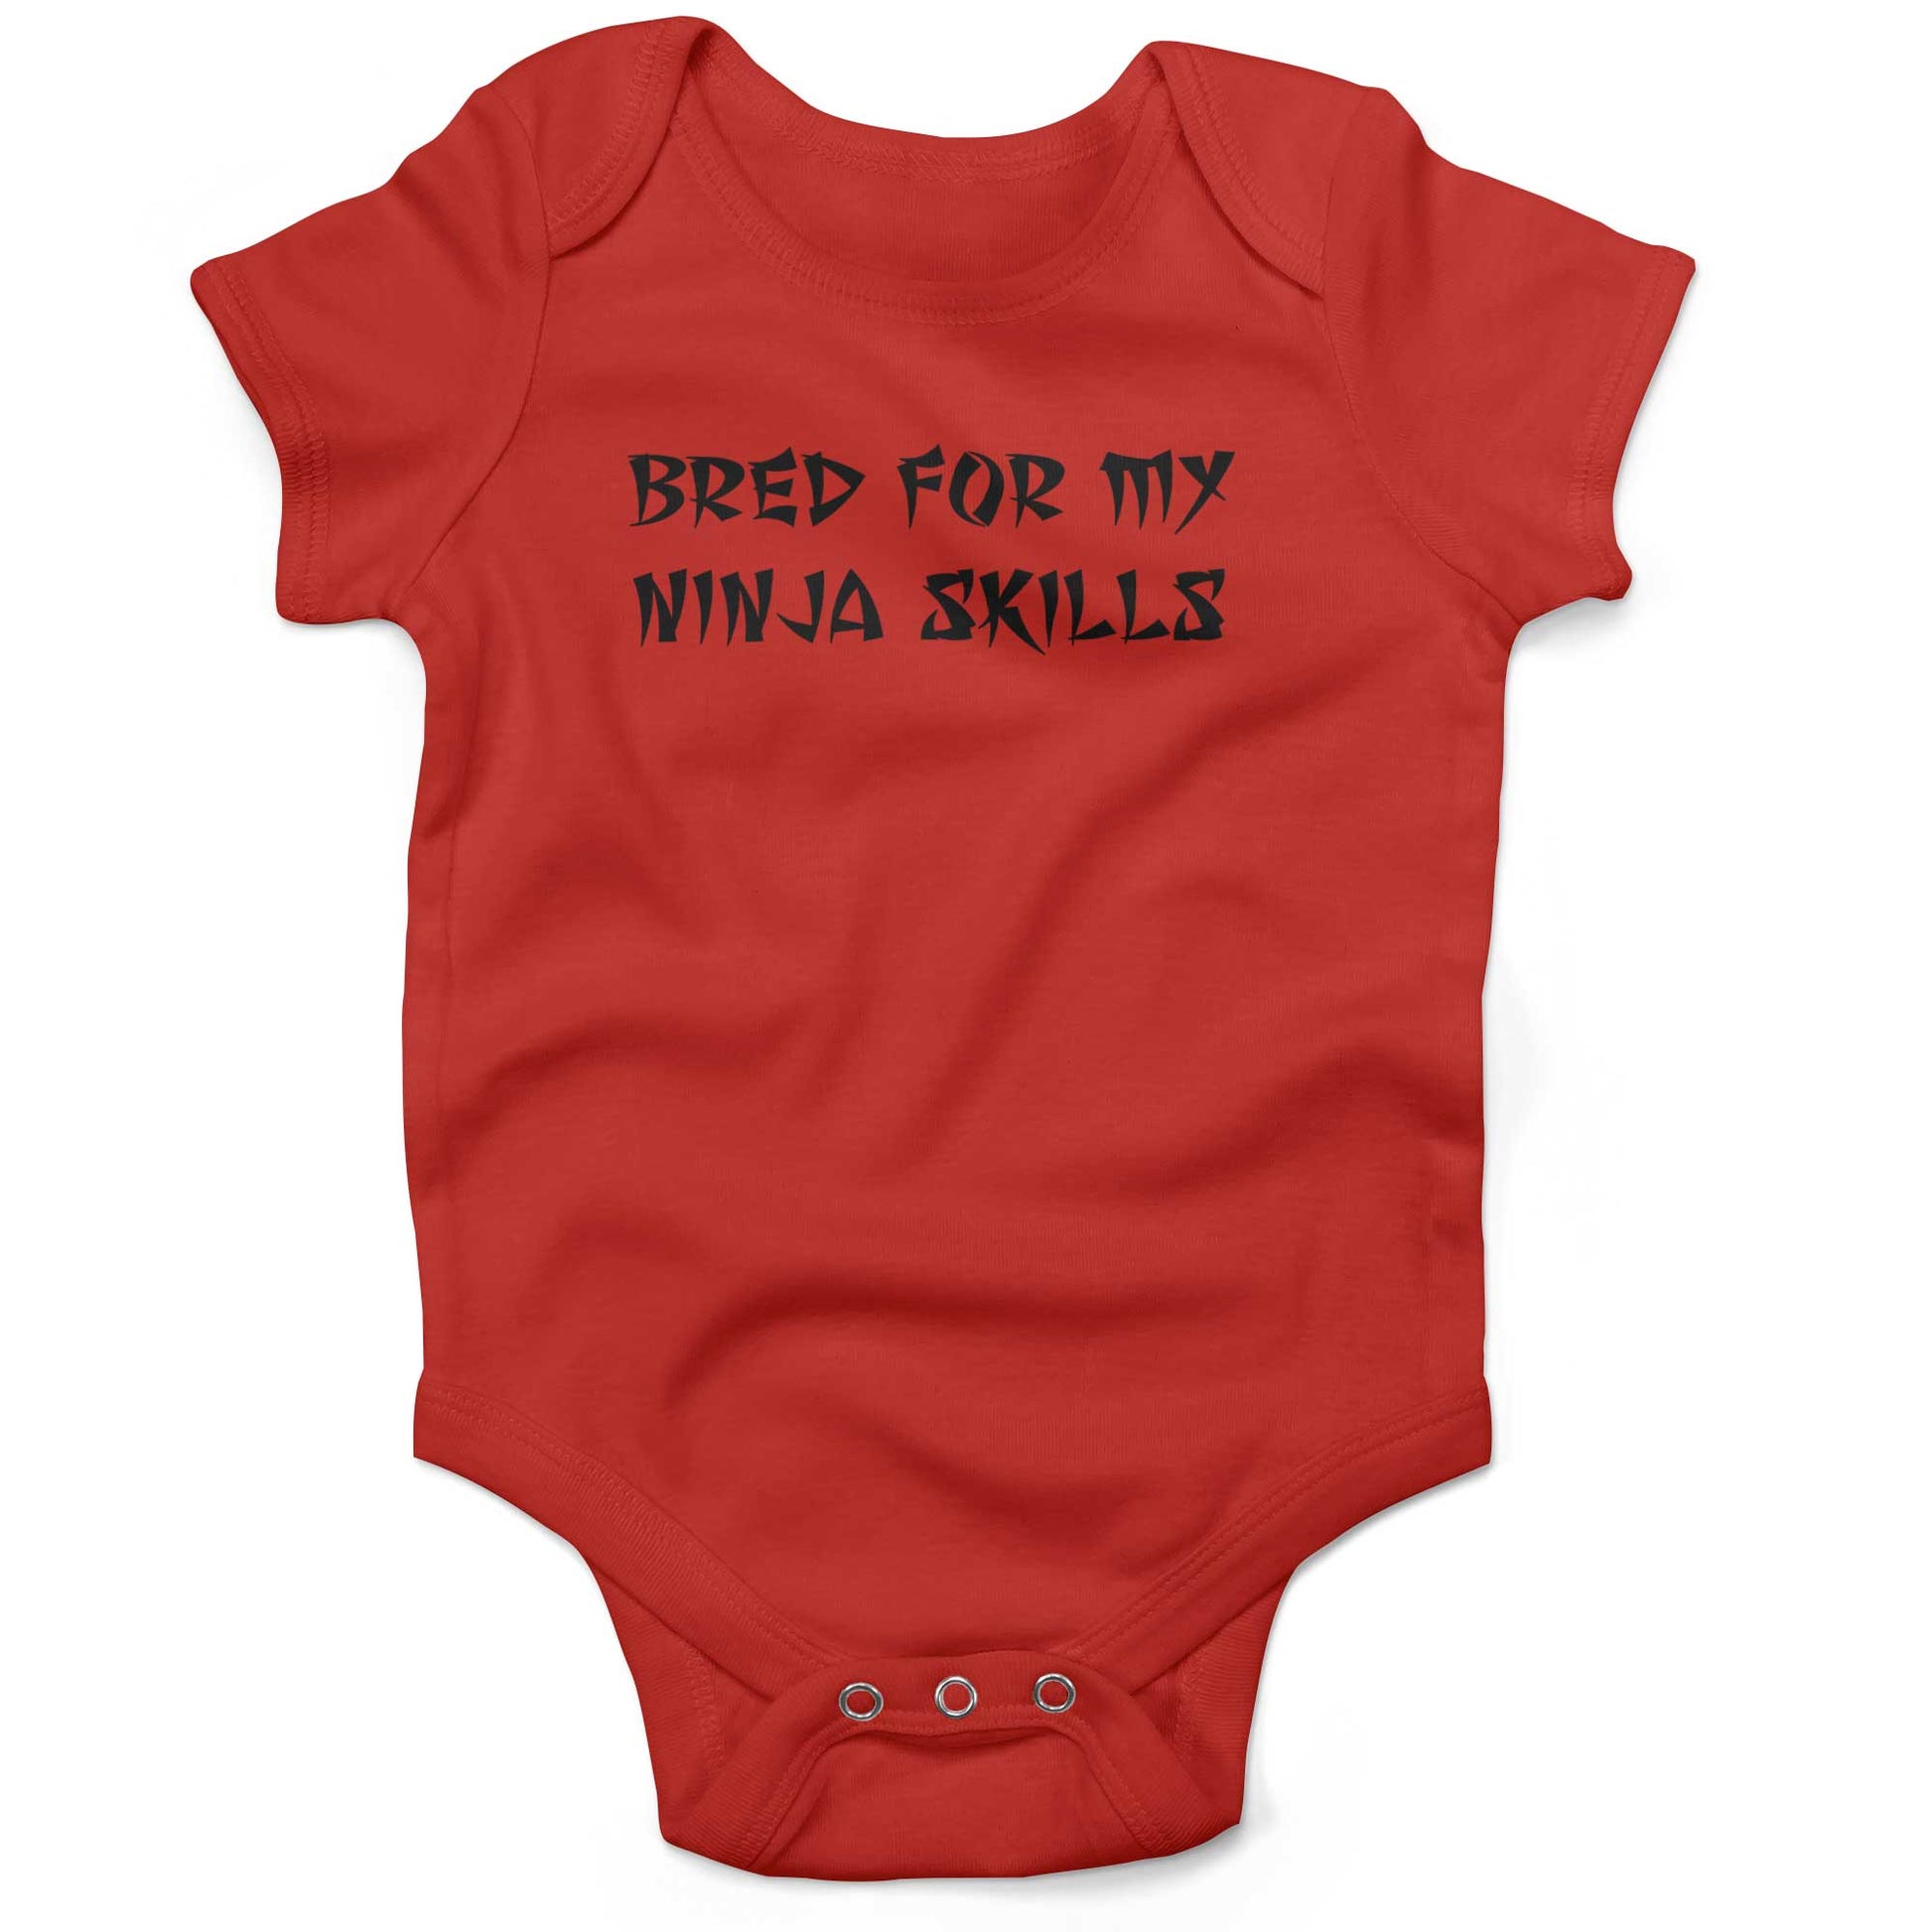 Bred For My Ninja Skills Infant Bodysuit or Raglan Baby Tee-Organic Red-3-6 months